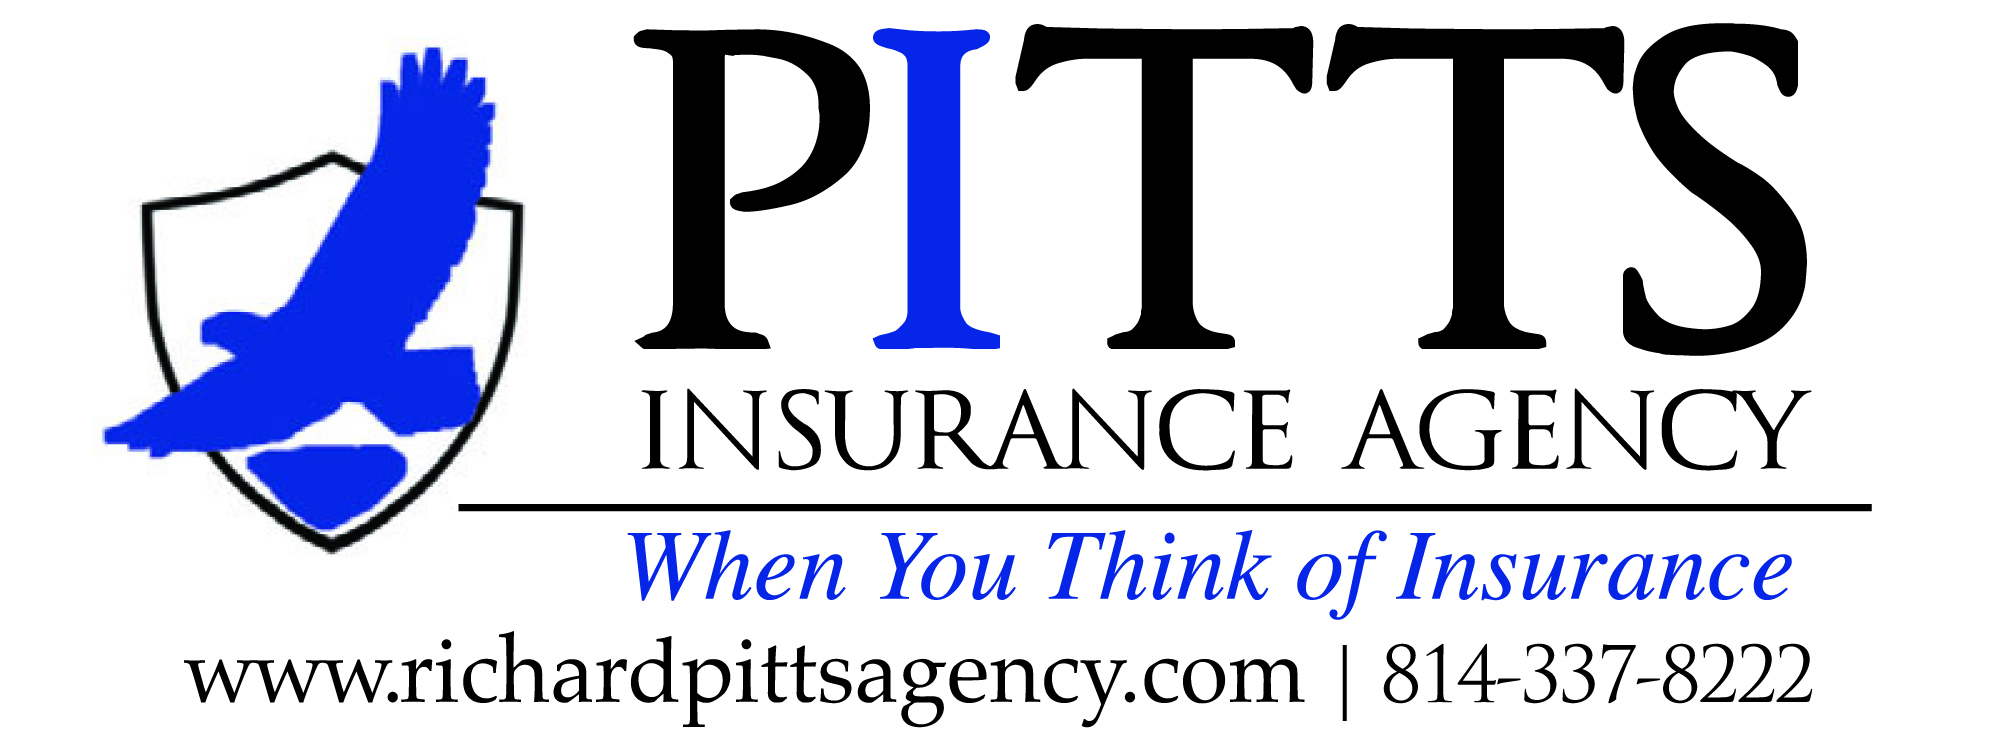 Richard Pitts Agency's logo